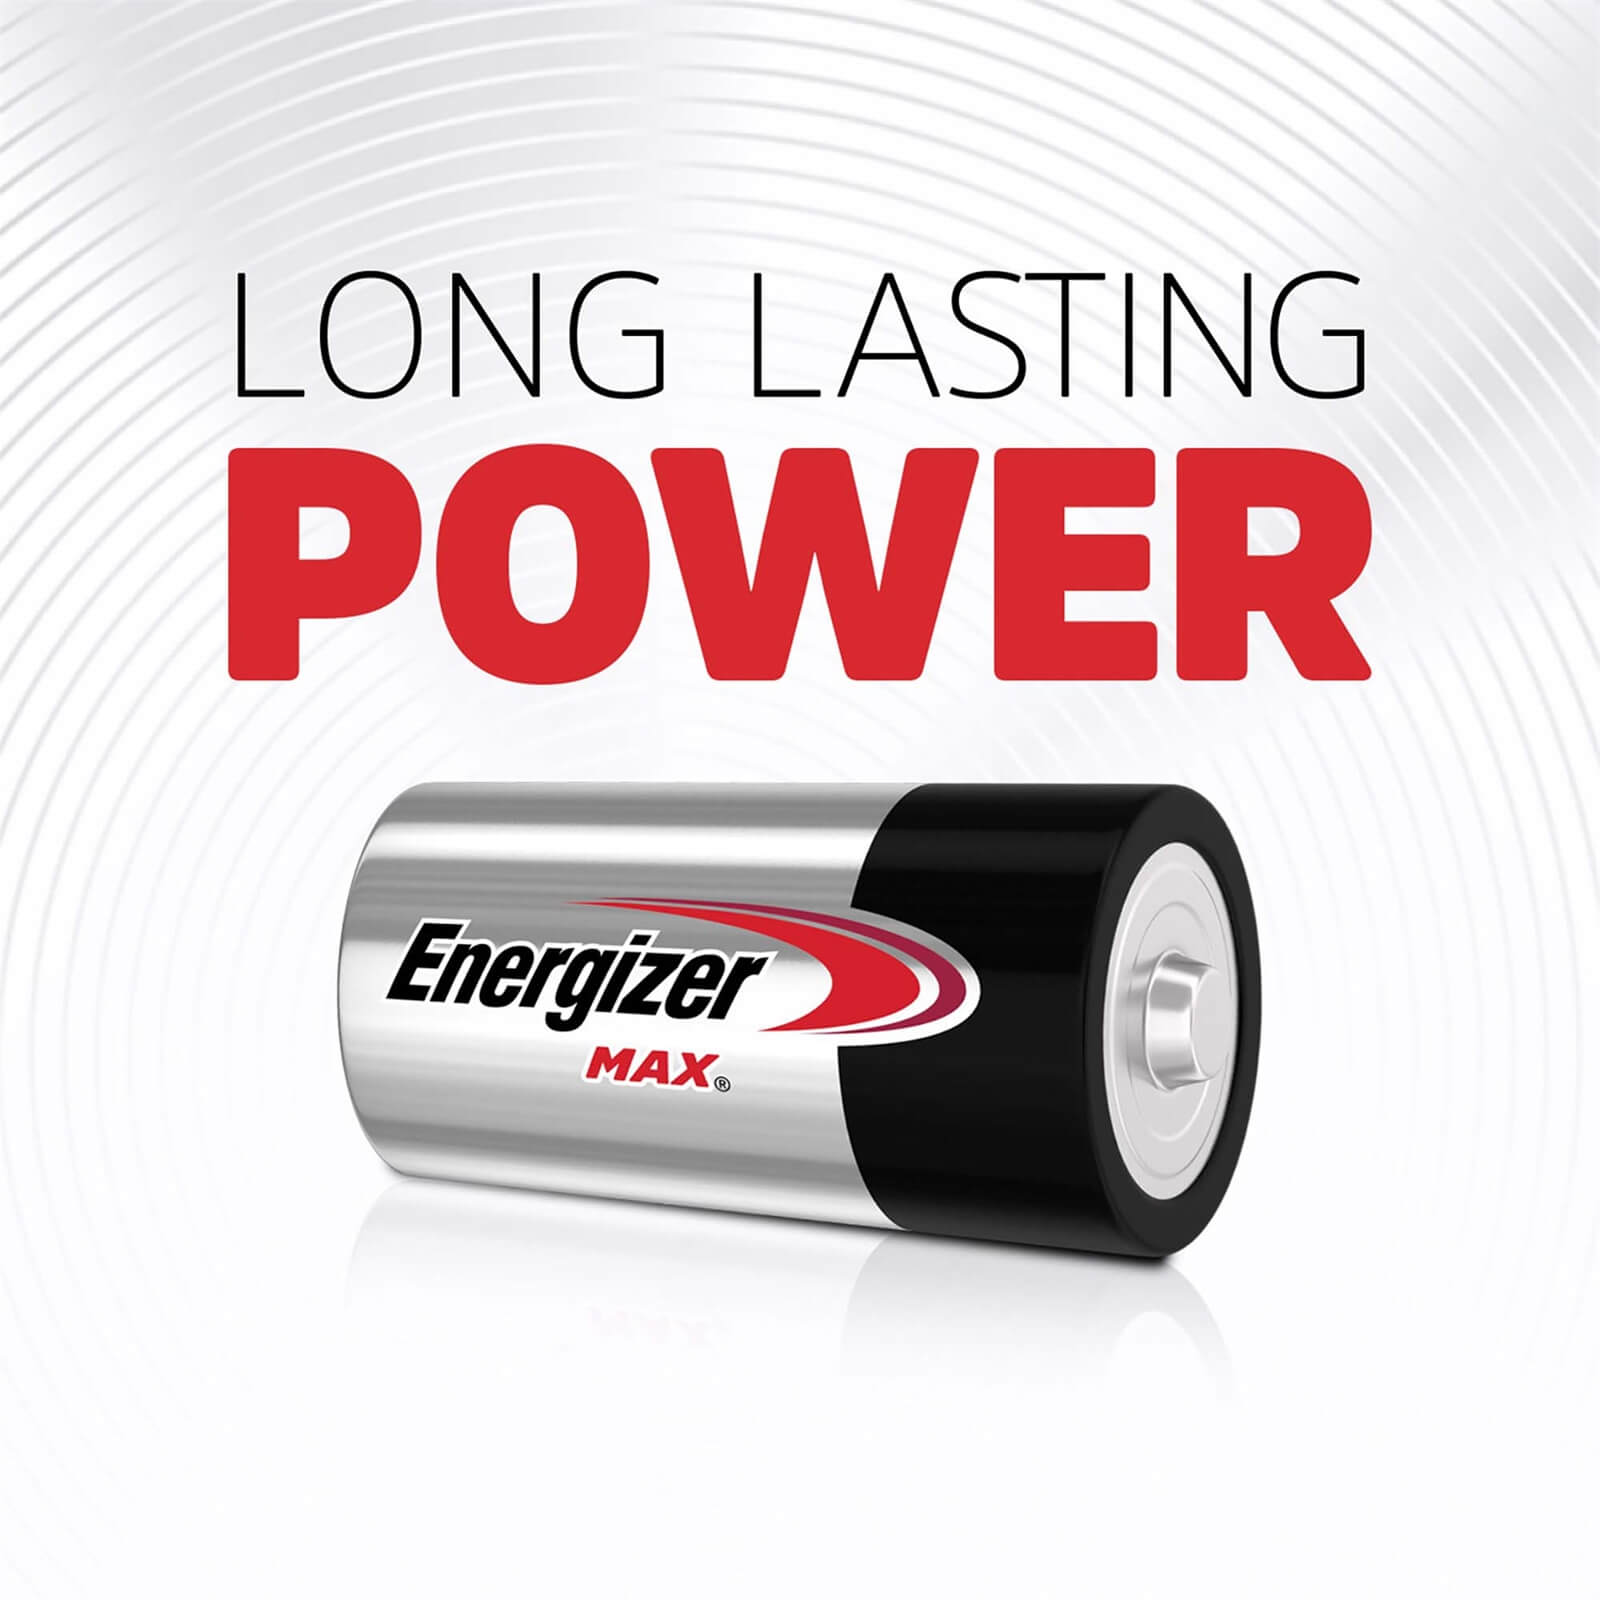 Energizer MAX Alkaline C Batteries - 2 Pack